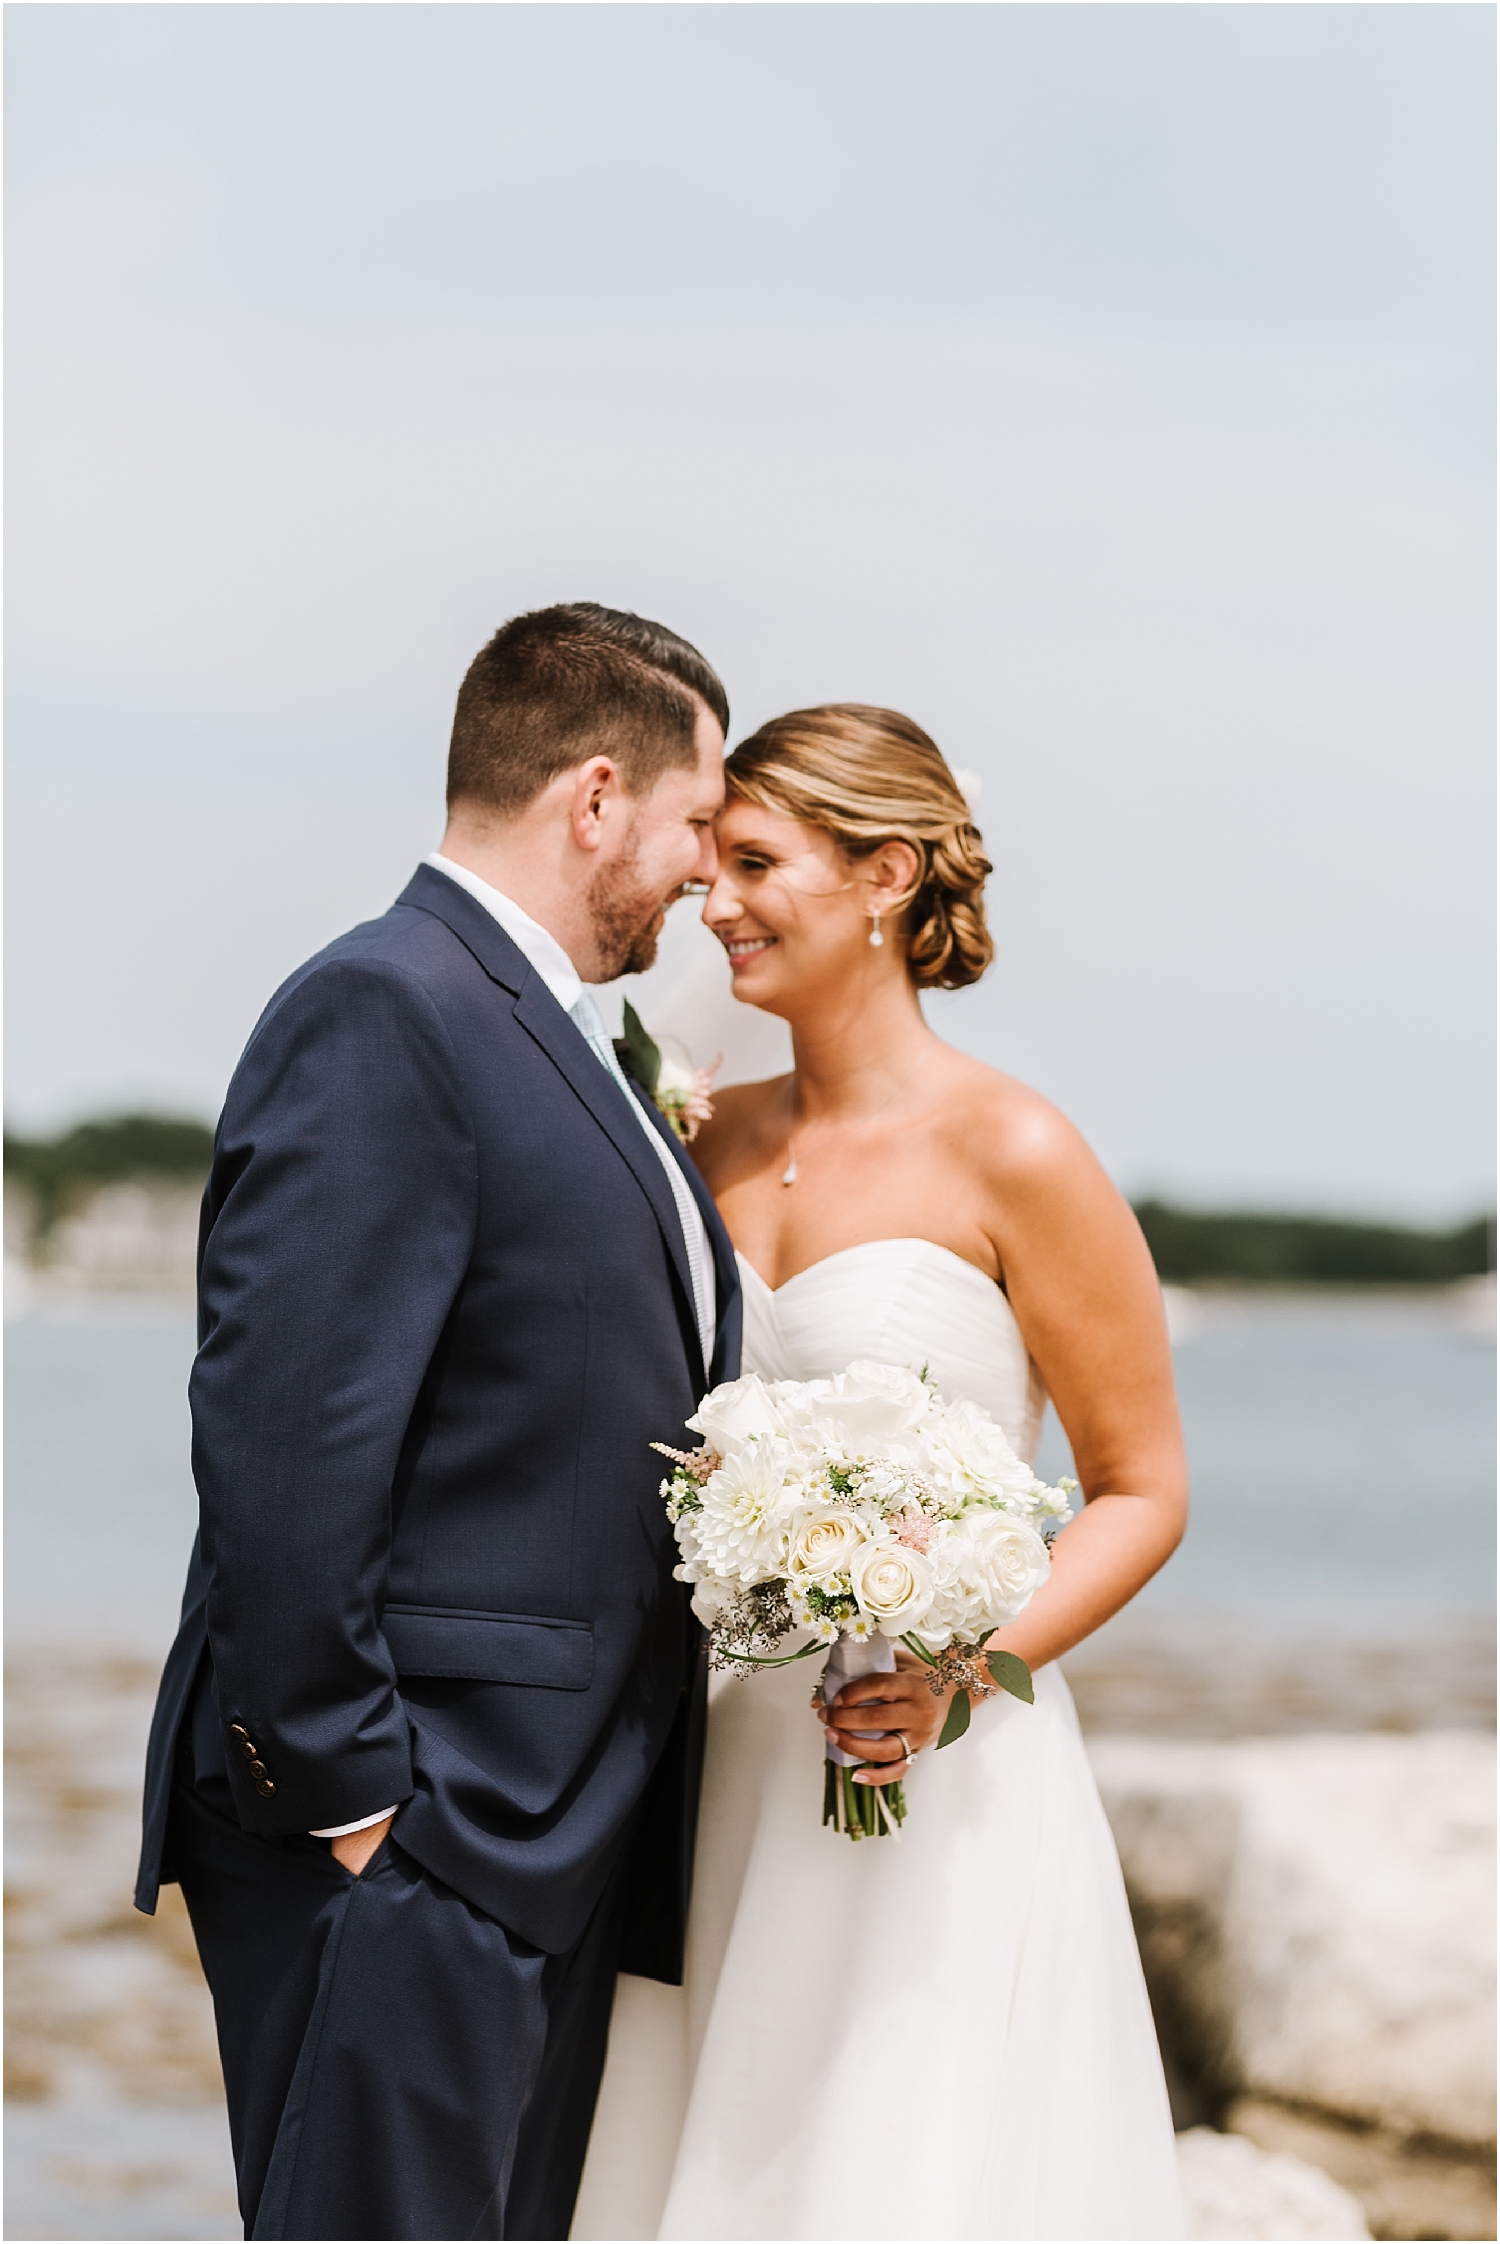 Joyful Summer Coastal Wedding at the Wentworth by the Sea Country Club in Rye, NH by Boston Wedding Photographer Annmarie Swift